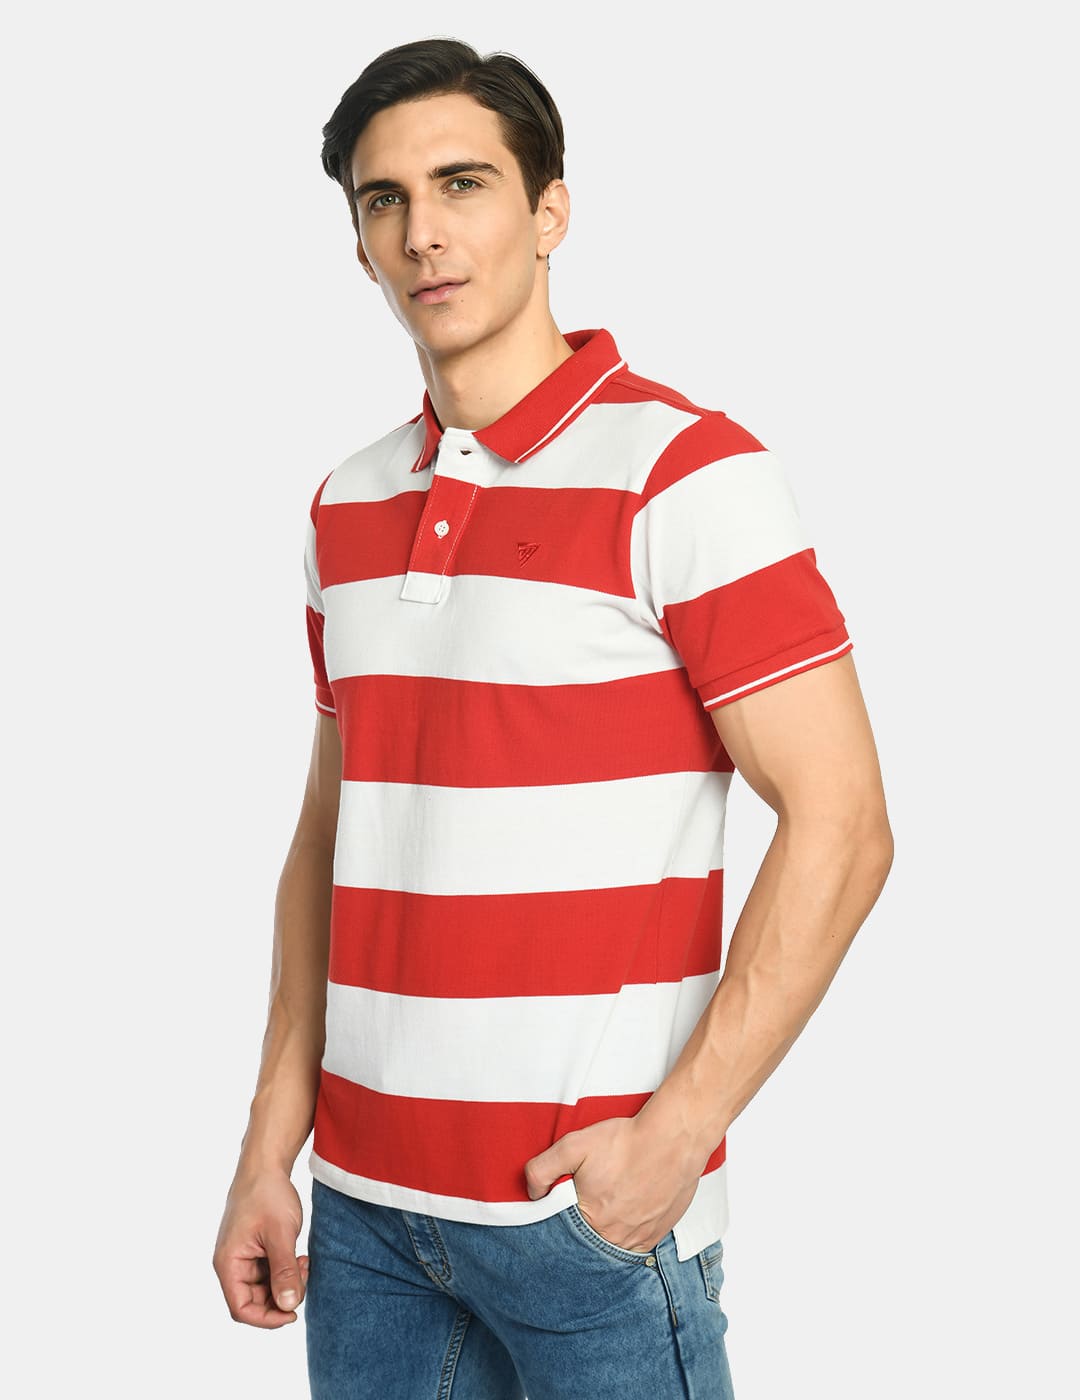 Men's Striped Red White Polo T-Shirt